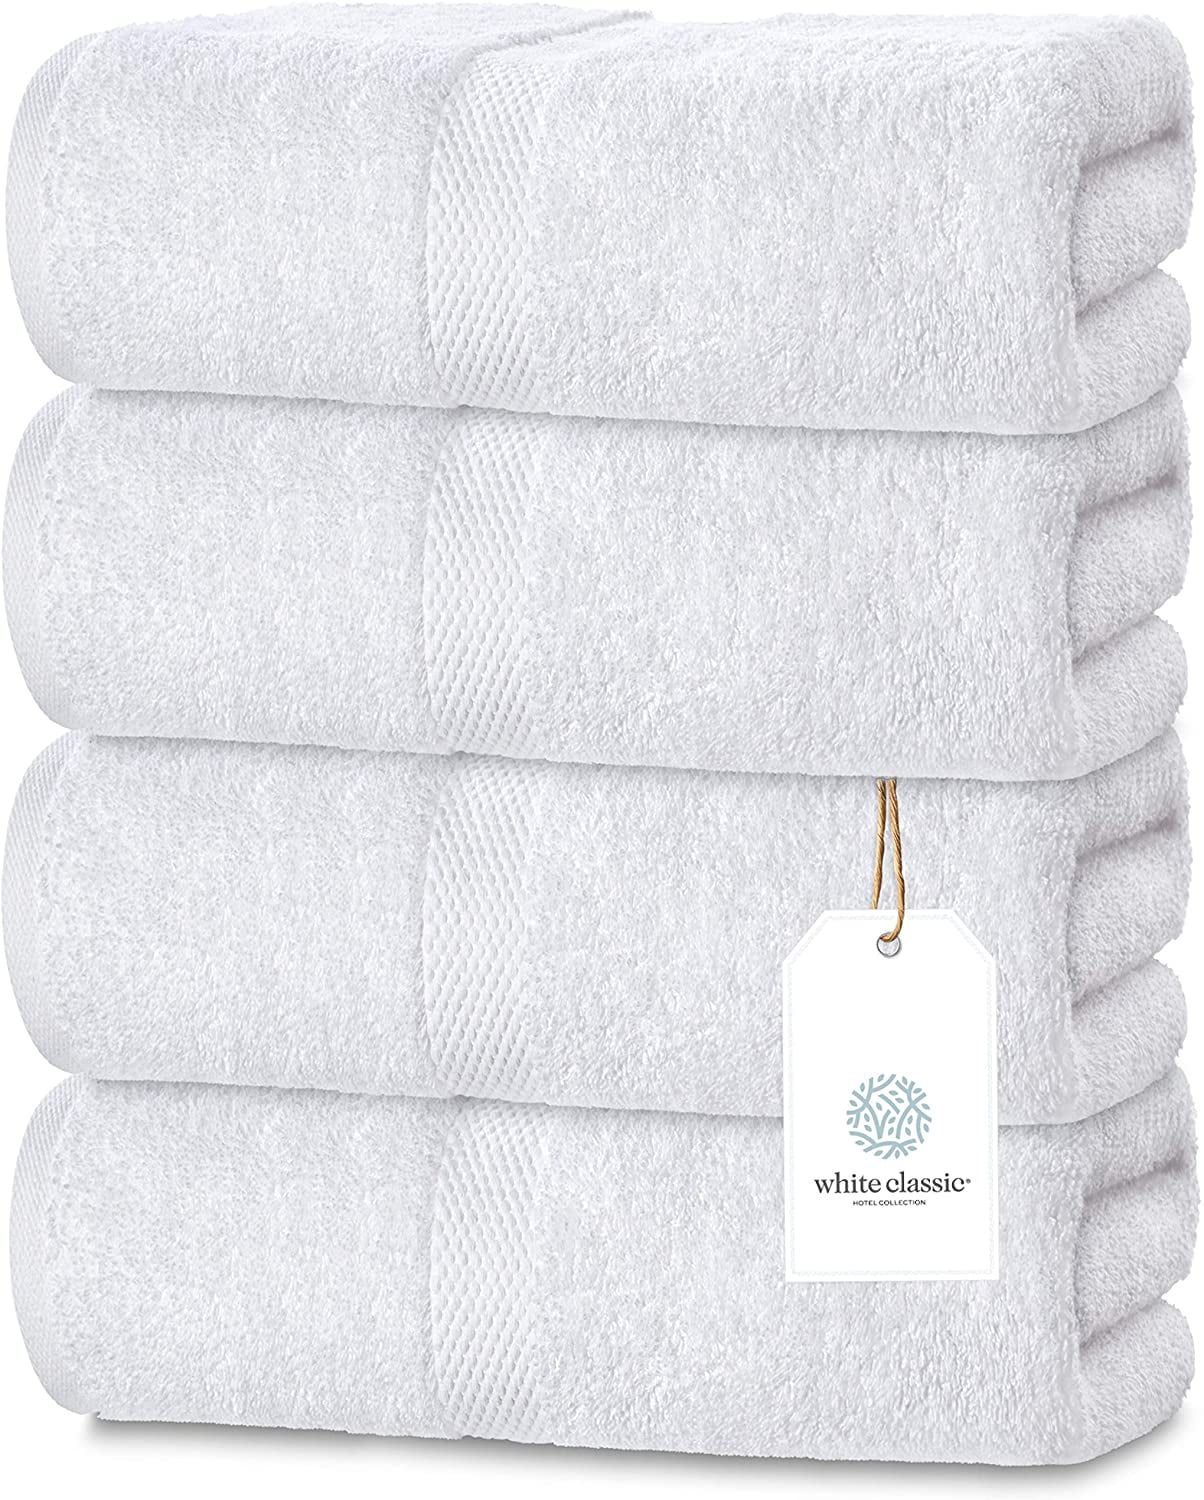 Large Hotel Spa Bathroom Face Towel... White Classic Luxury Cotton Washcloths 